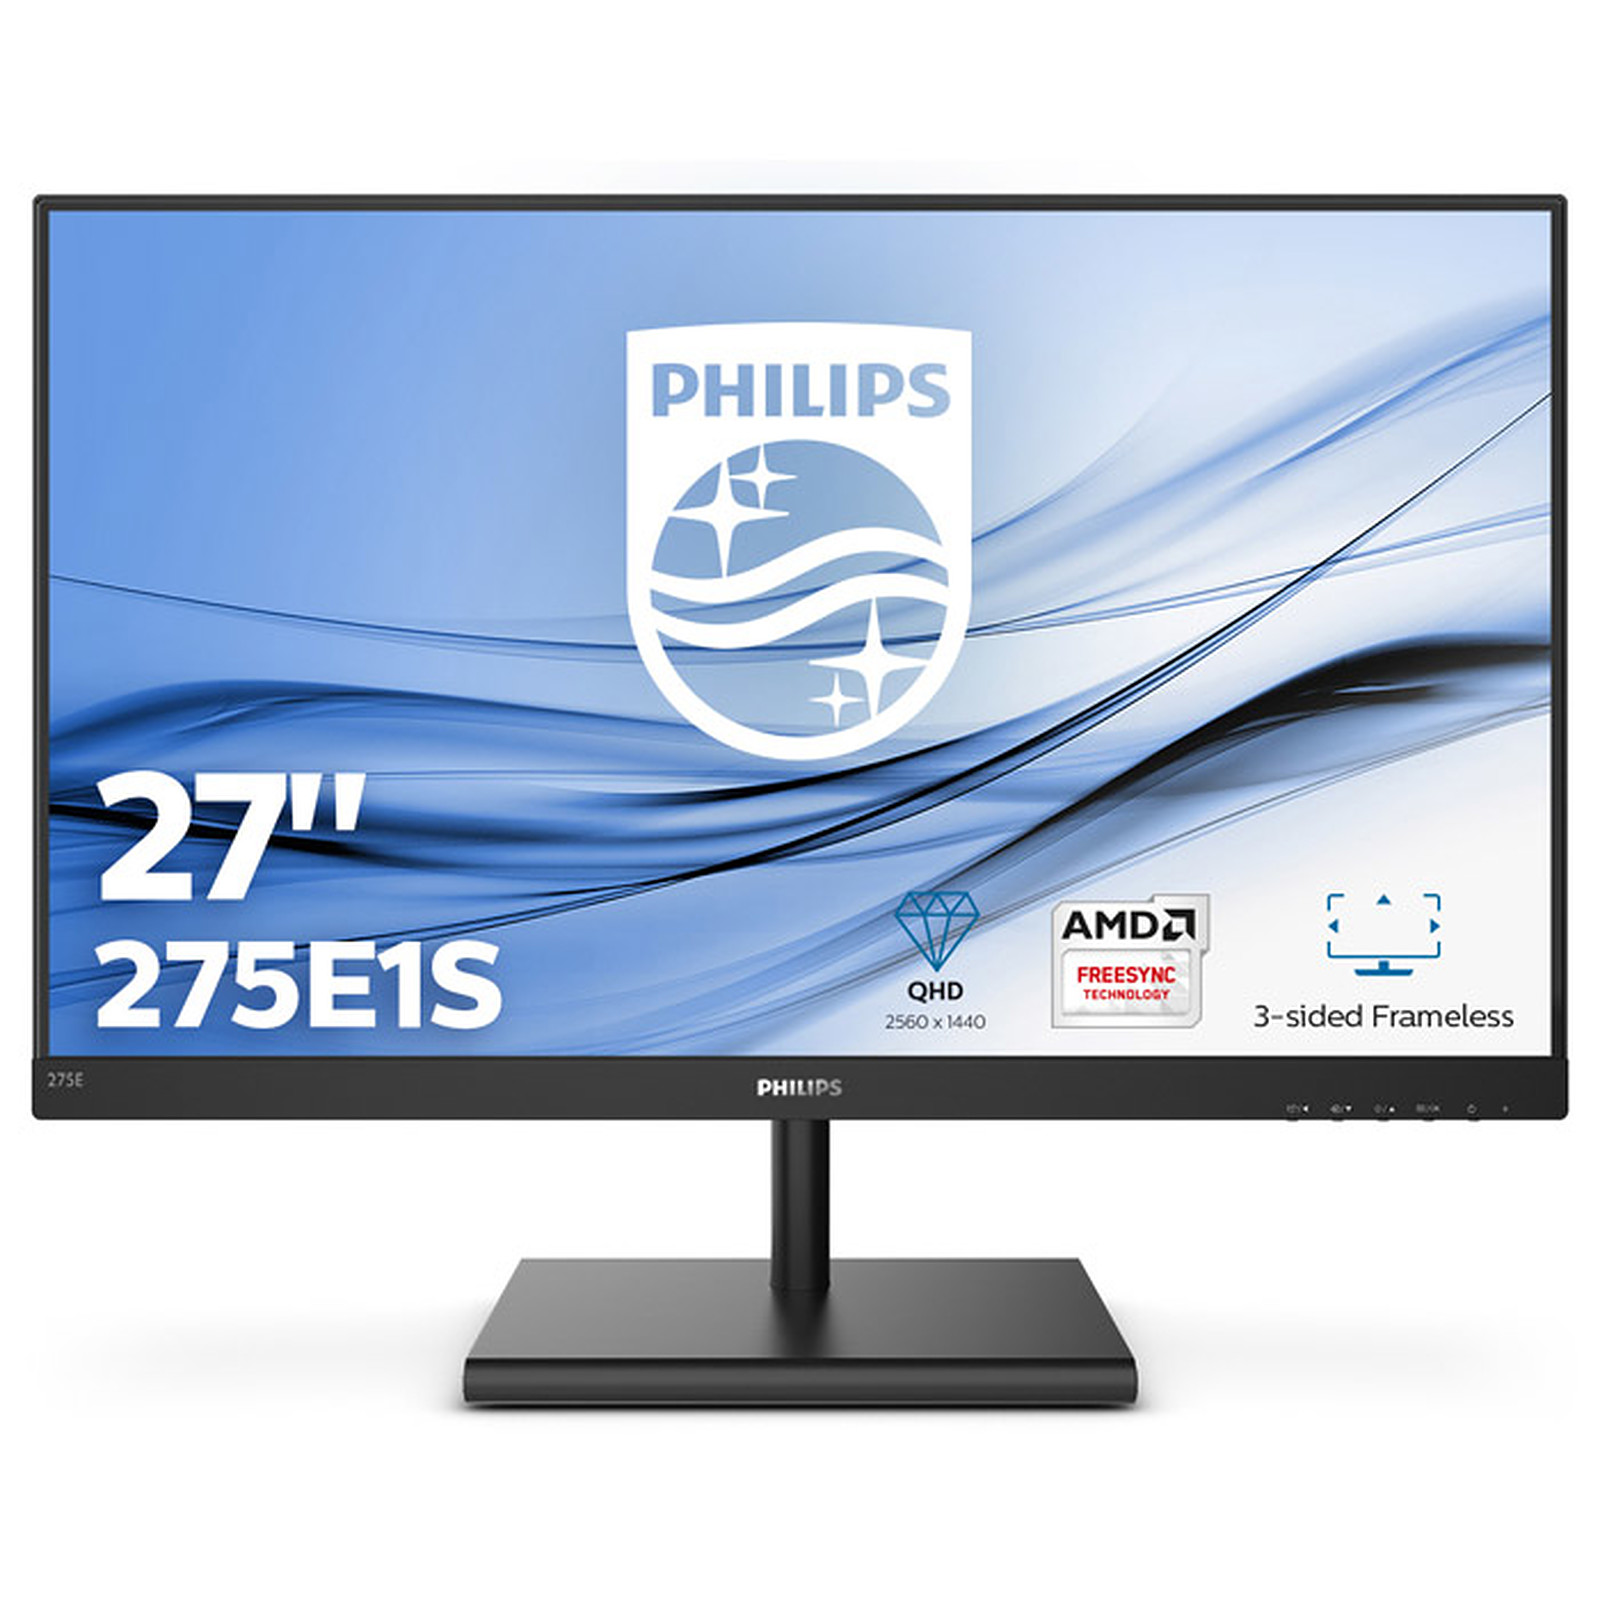 Philips 27" LED - 275E1S - Ecran PC Philips